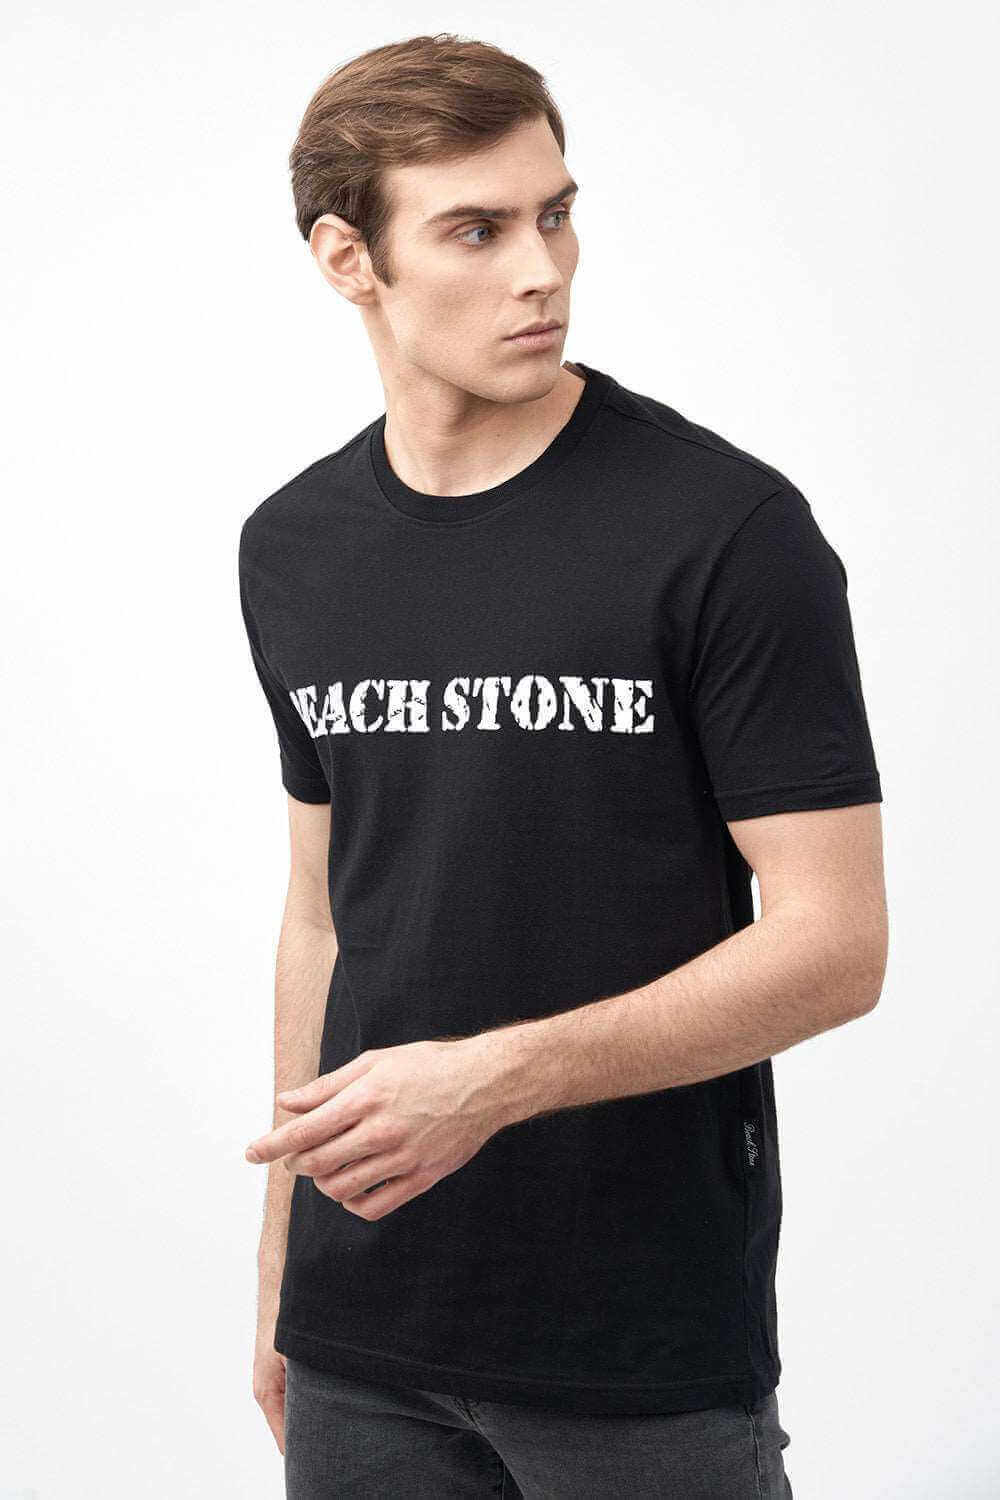 Side Pose of Men's Short Sleeve Shirts in Black